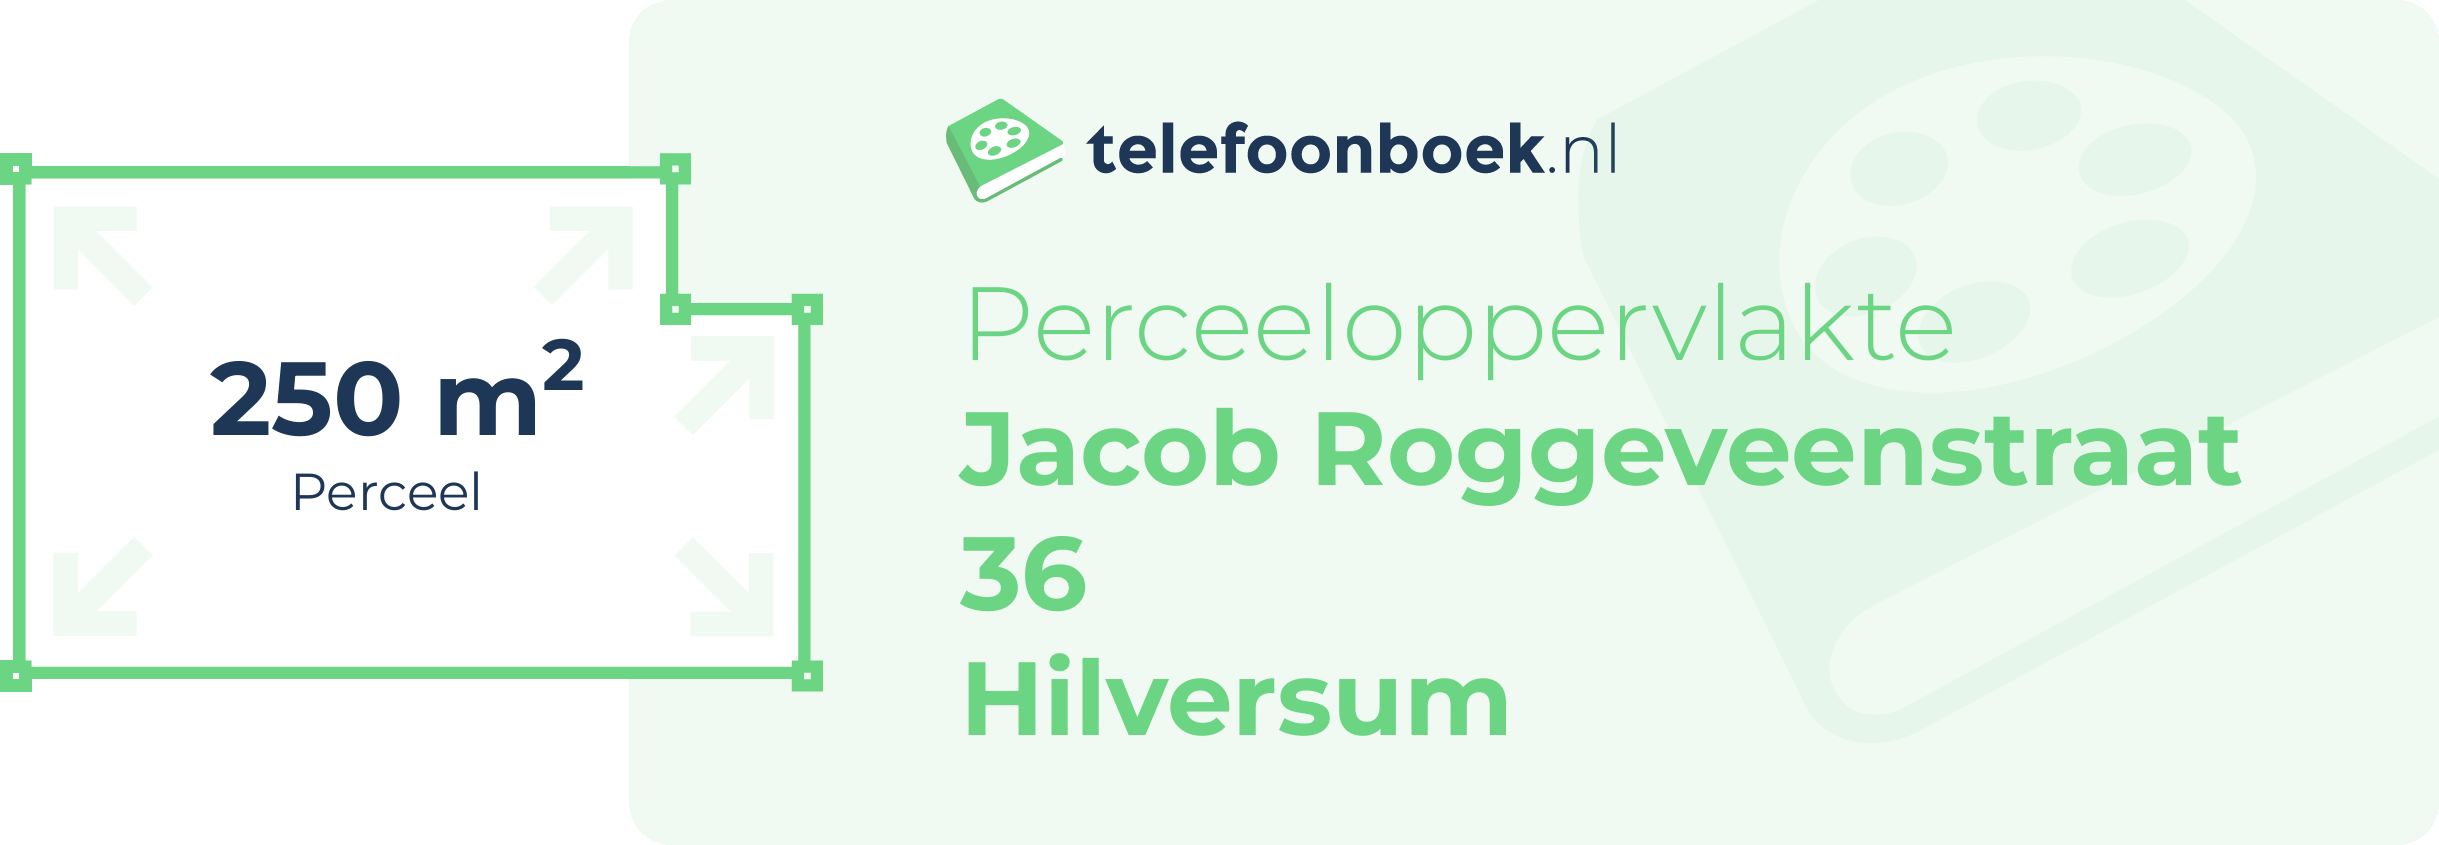 Perceeloppervlakte Jacob Roggeveenstraat 36 Hilversum